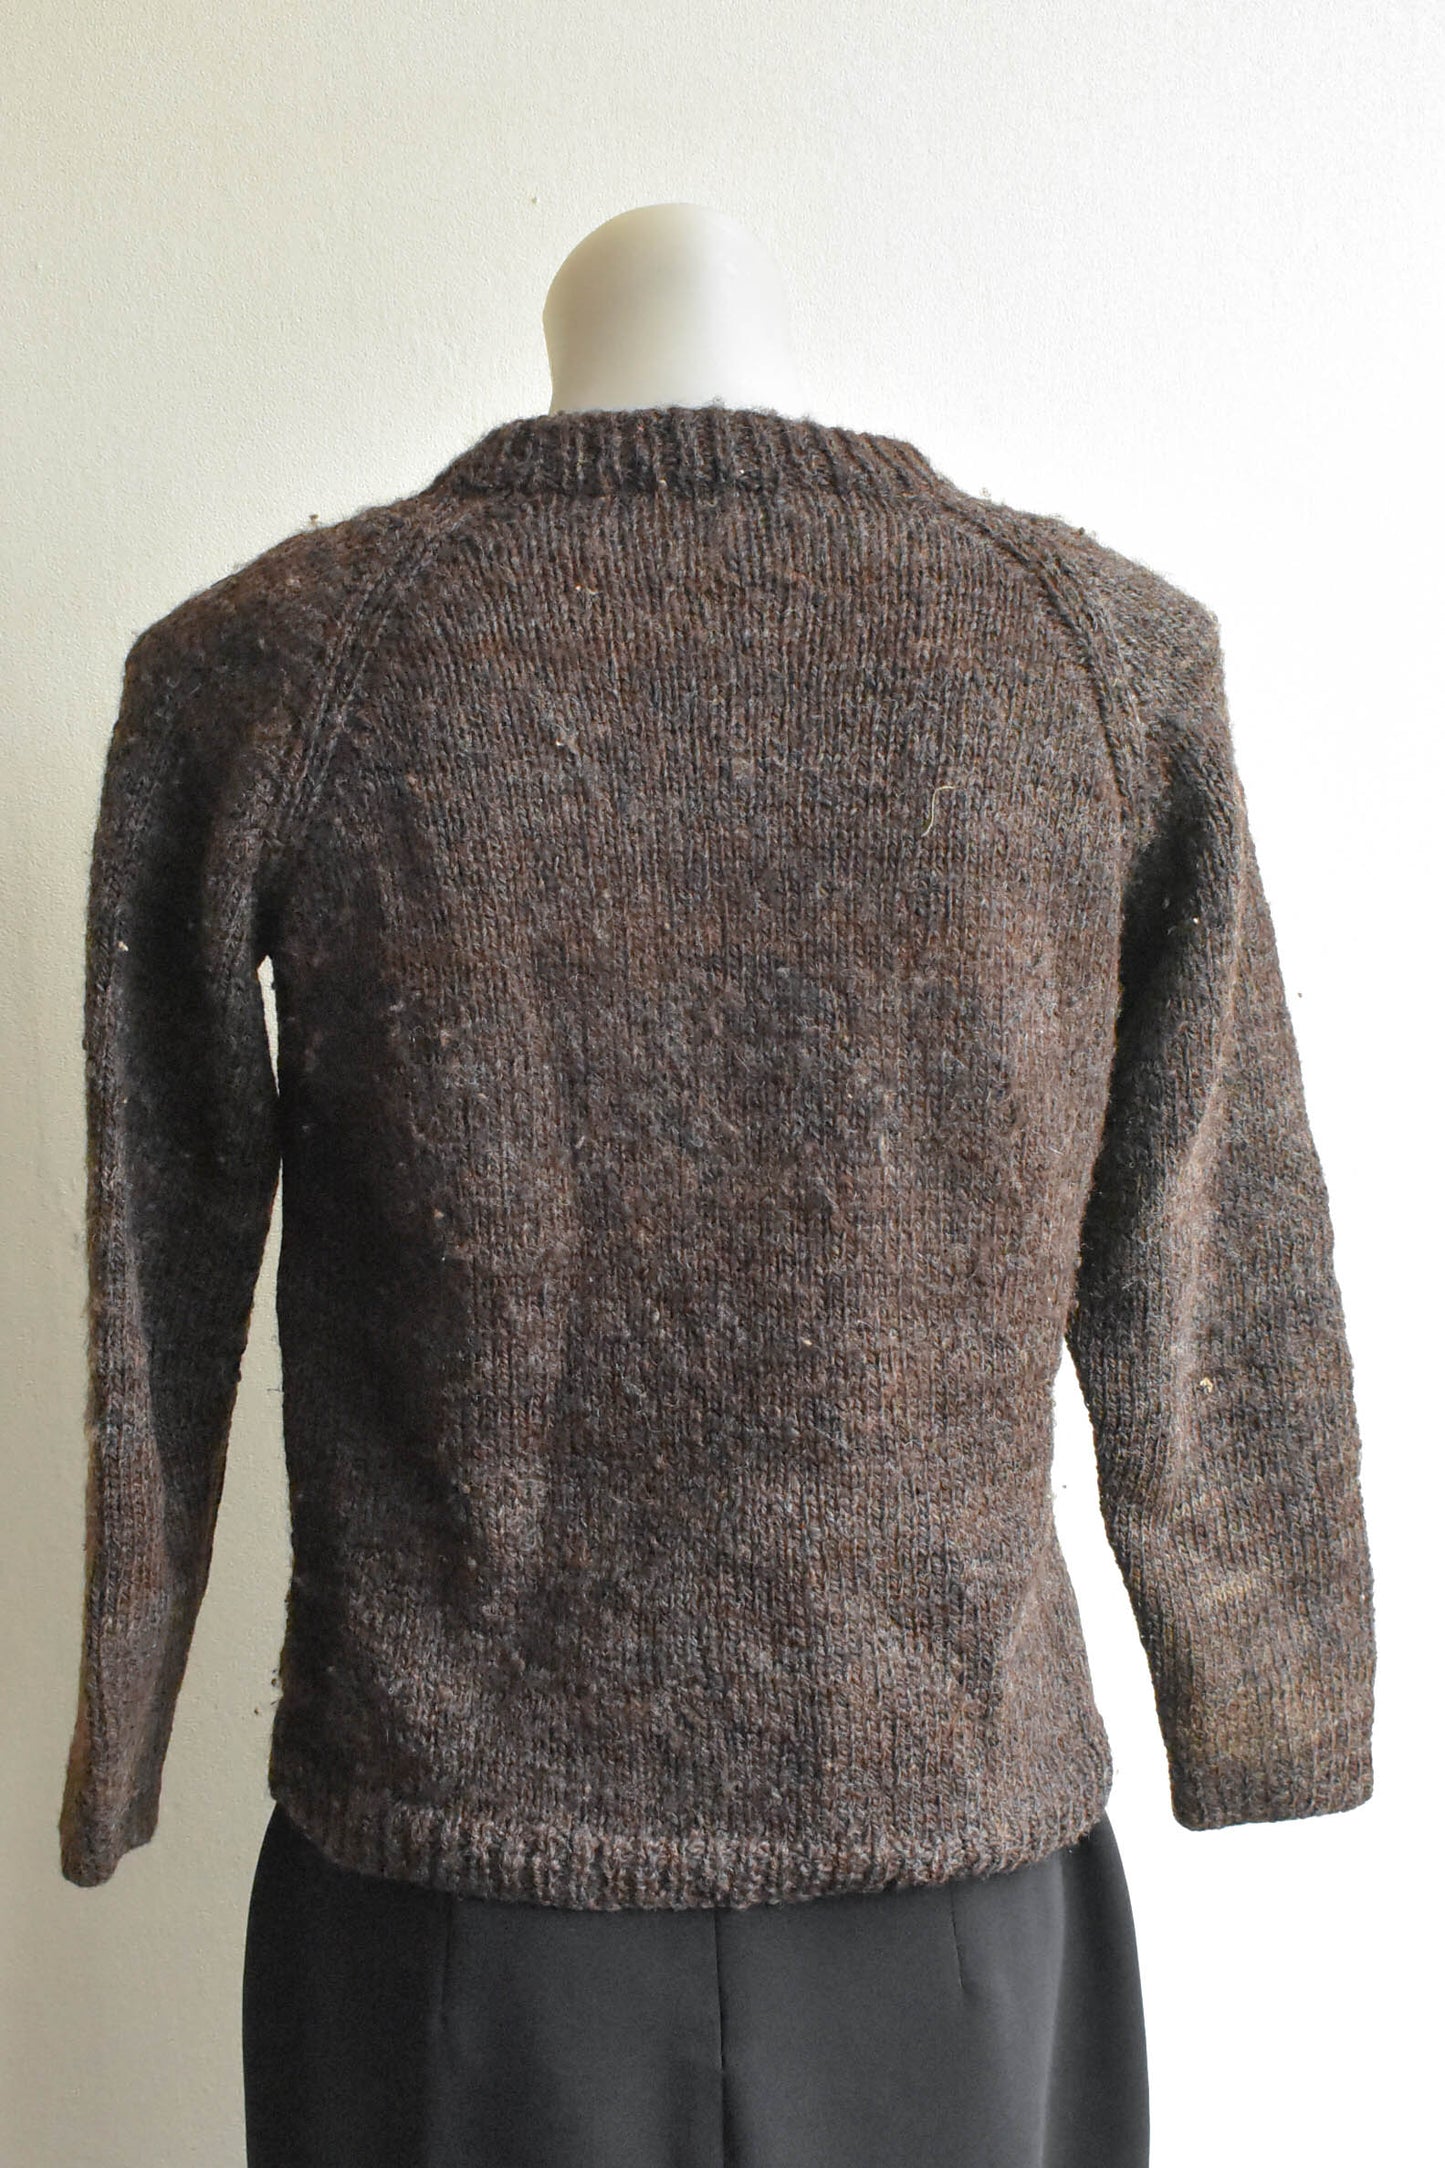 Brown wool jumper, size XS